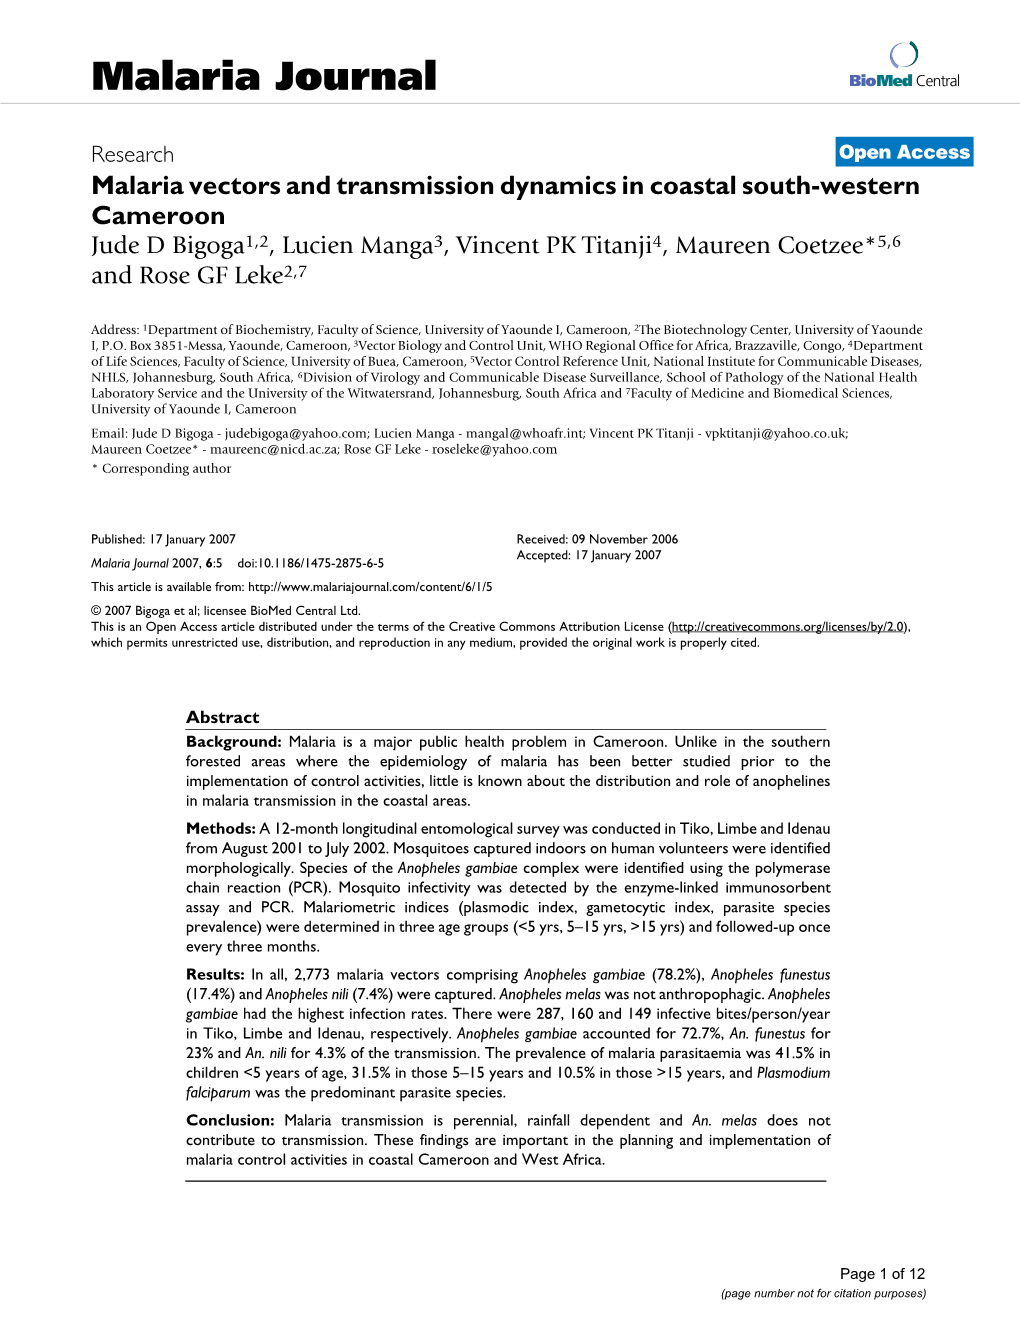 Malaria Vectors and Transmission Dynamics in Coastal South-Western